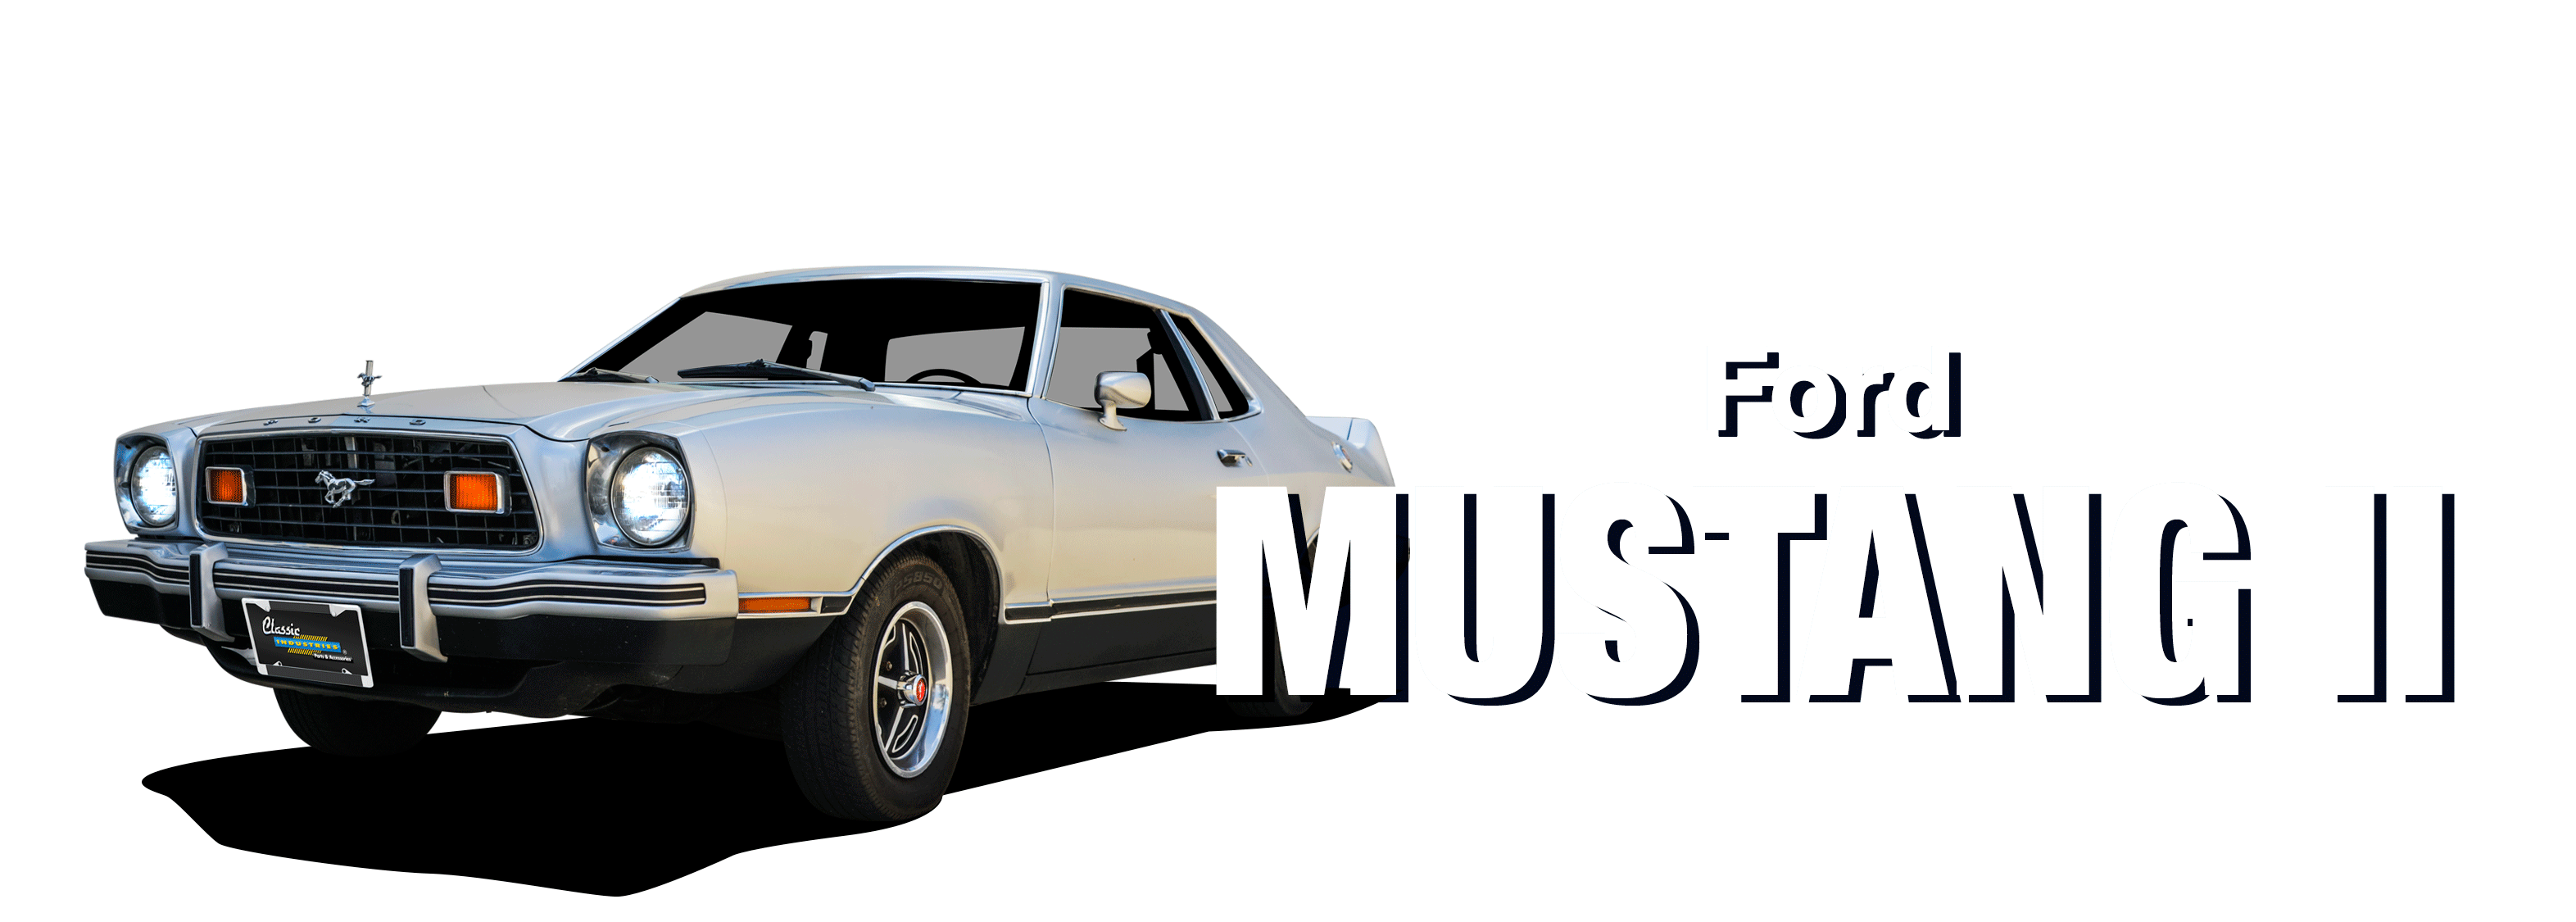 Ford-MustangII-vehicle-desktop